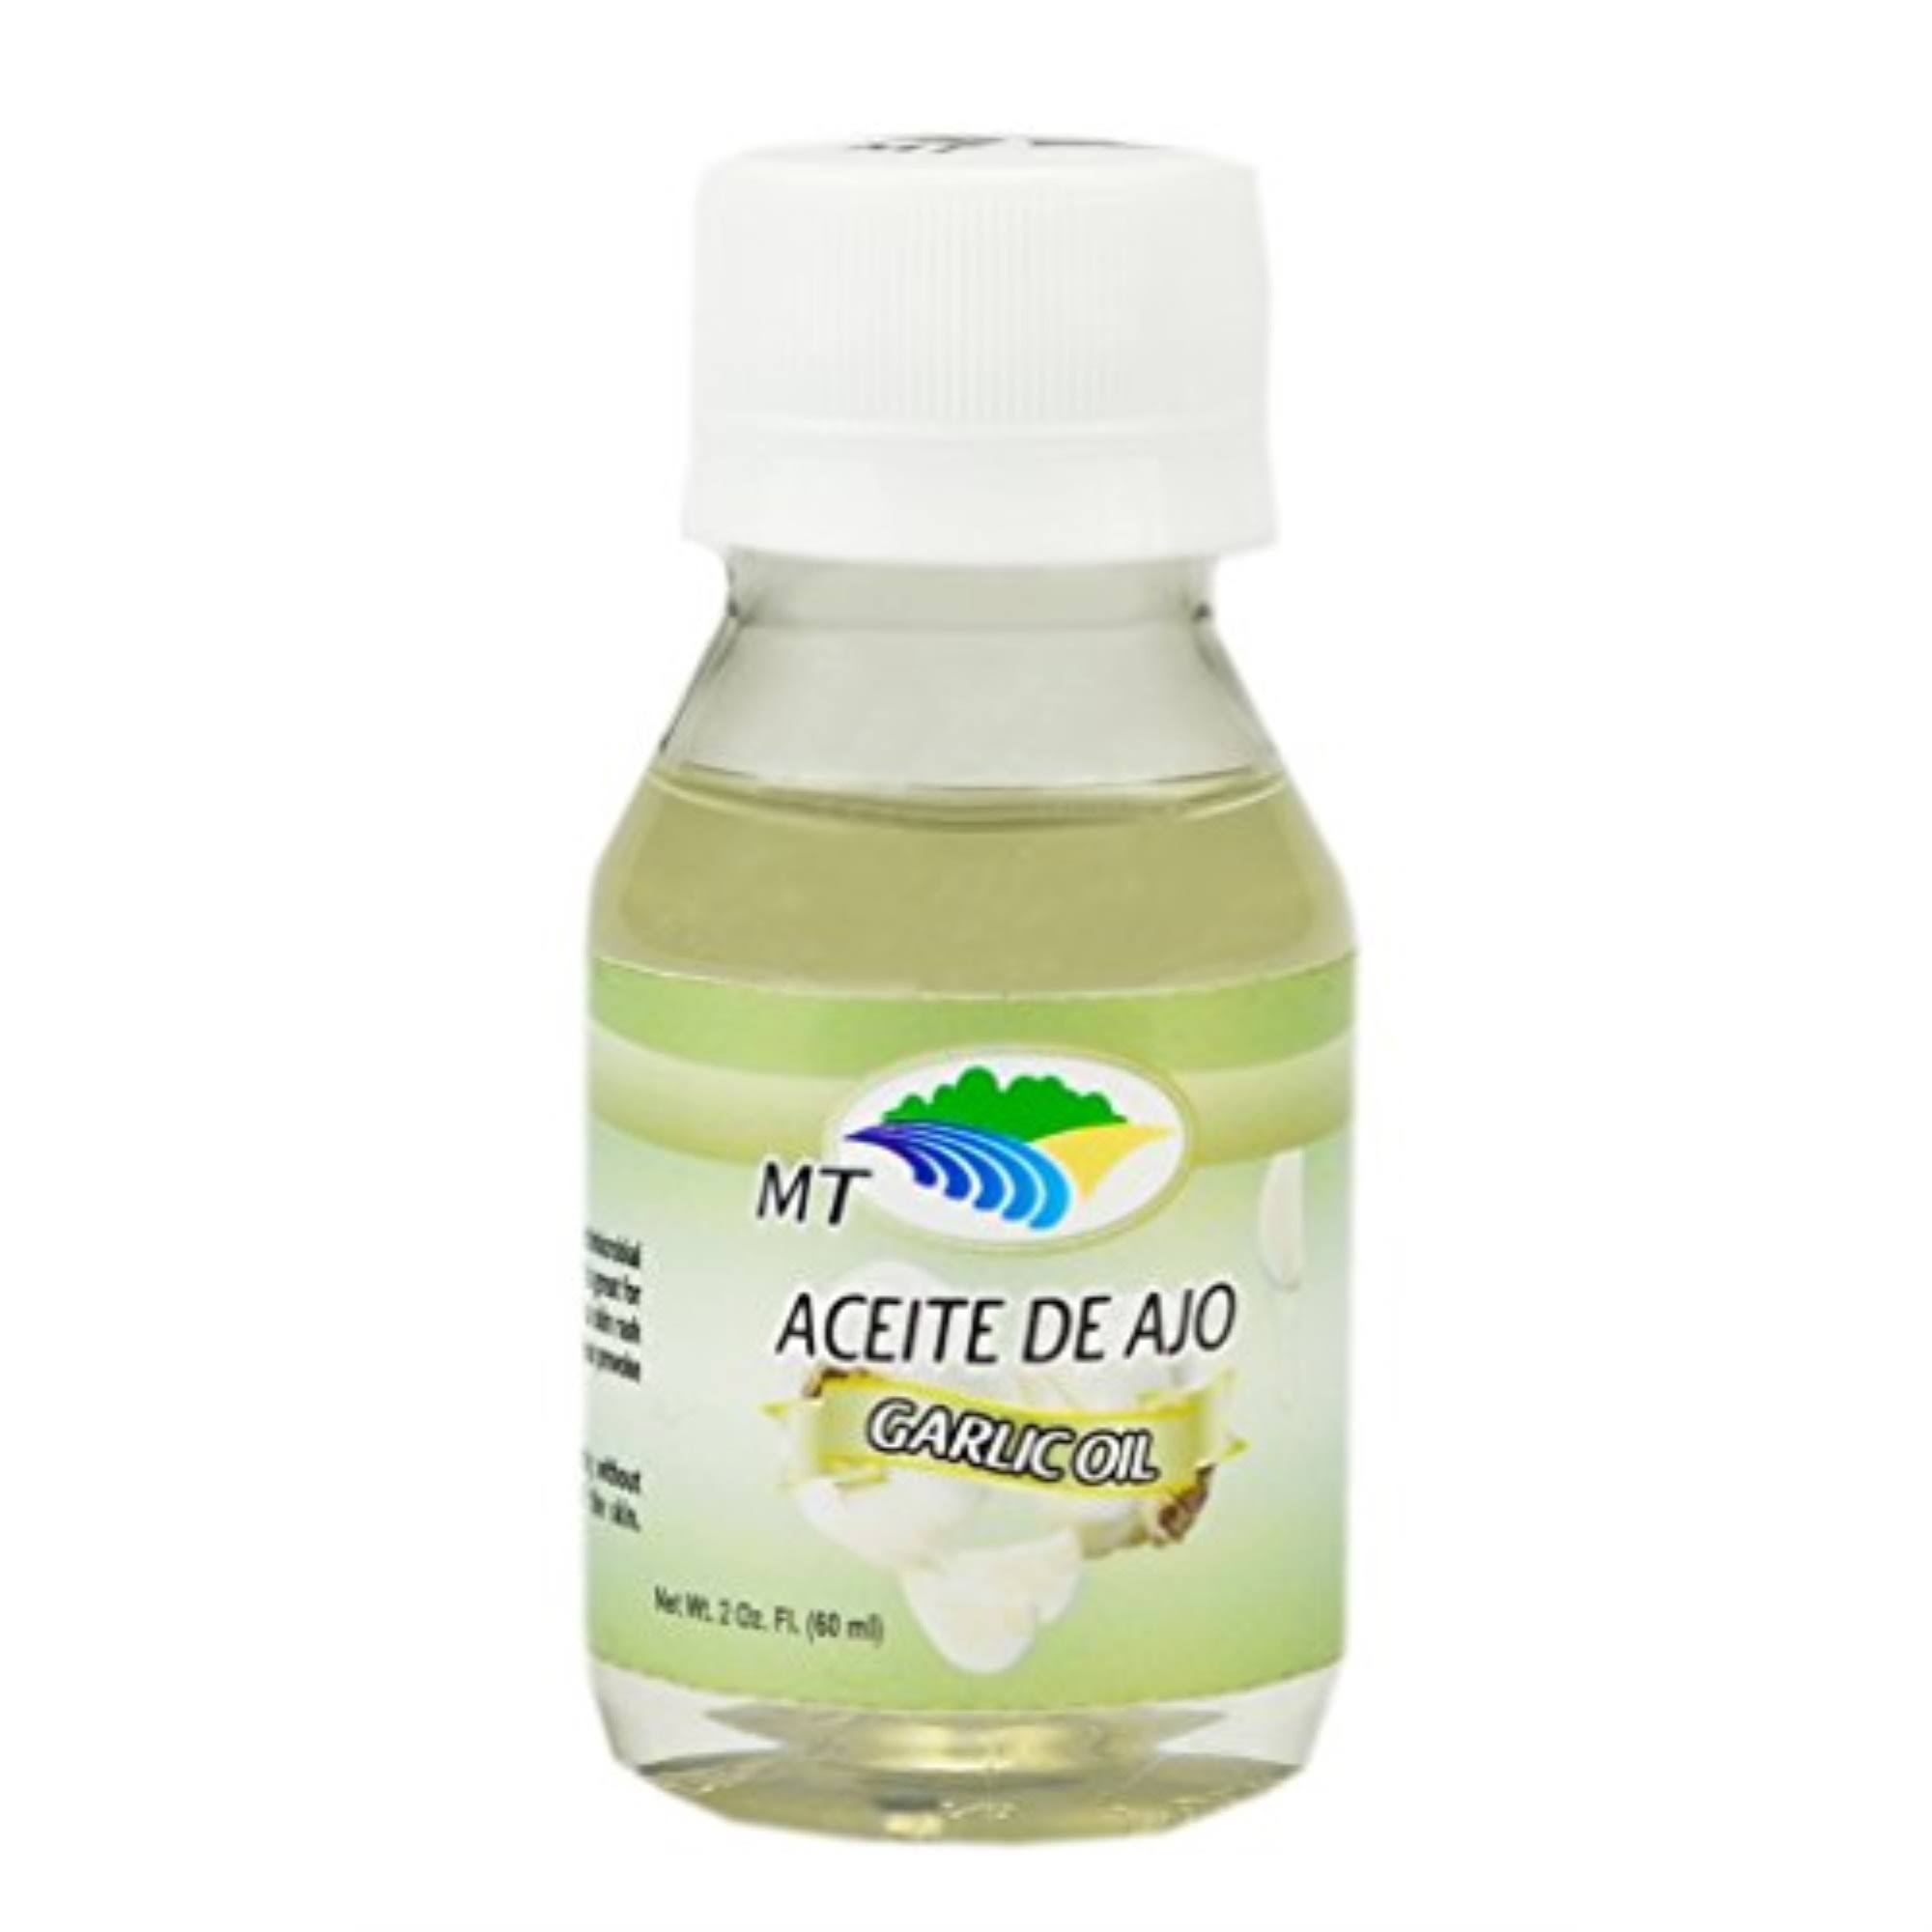 Madre Tierra Aceite de Glicerina/Glycerine Oil 2 Oz